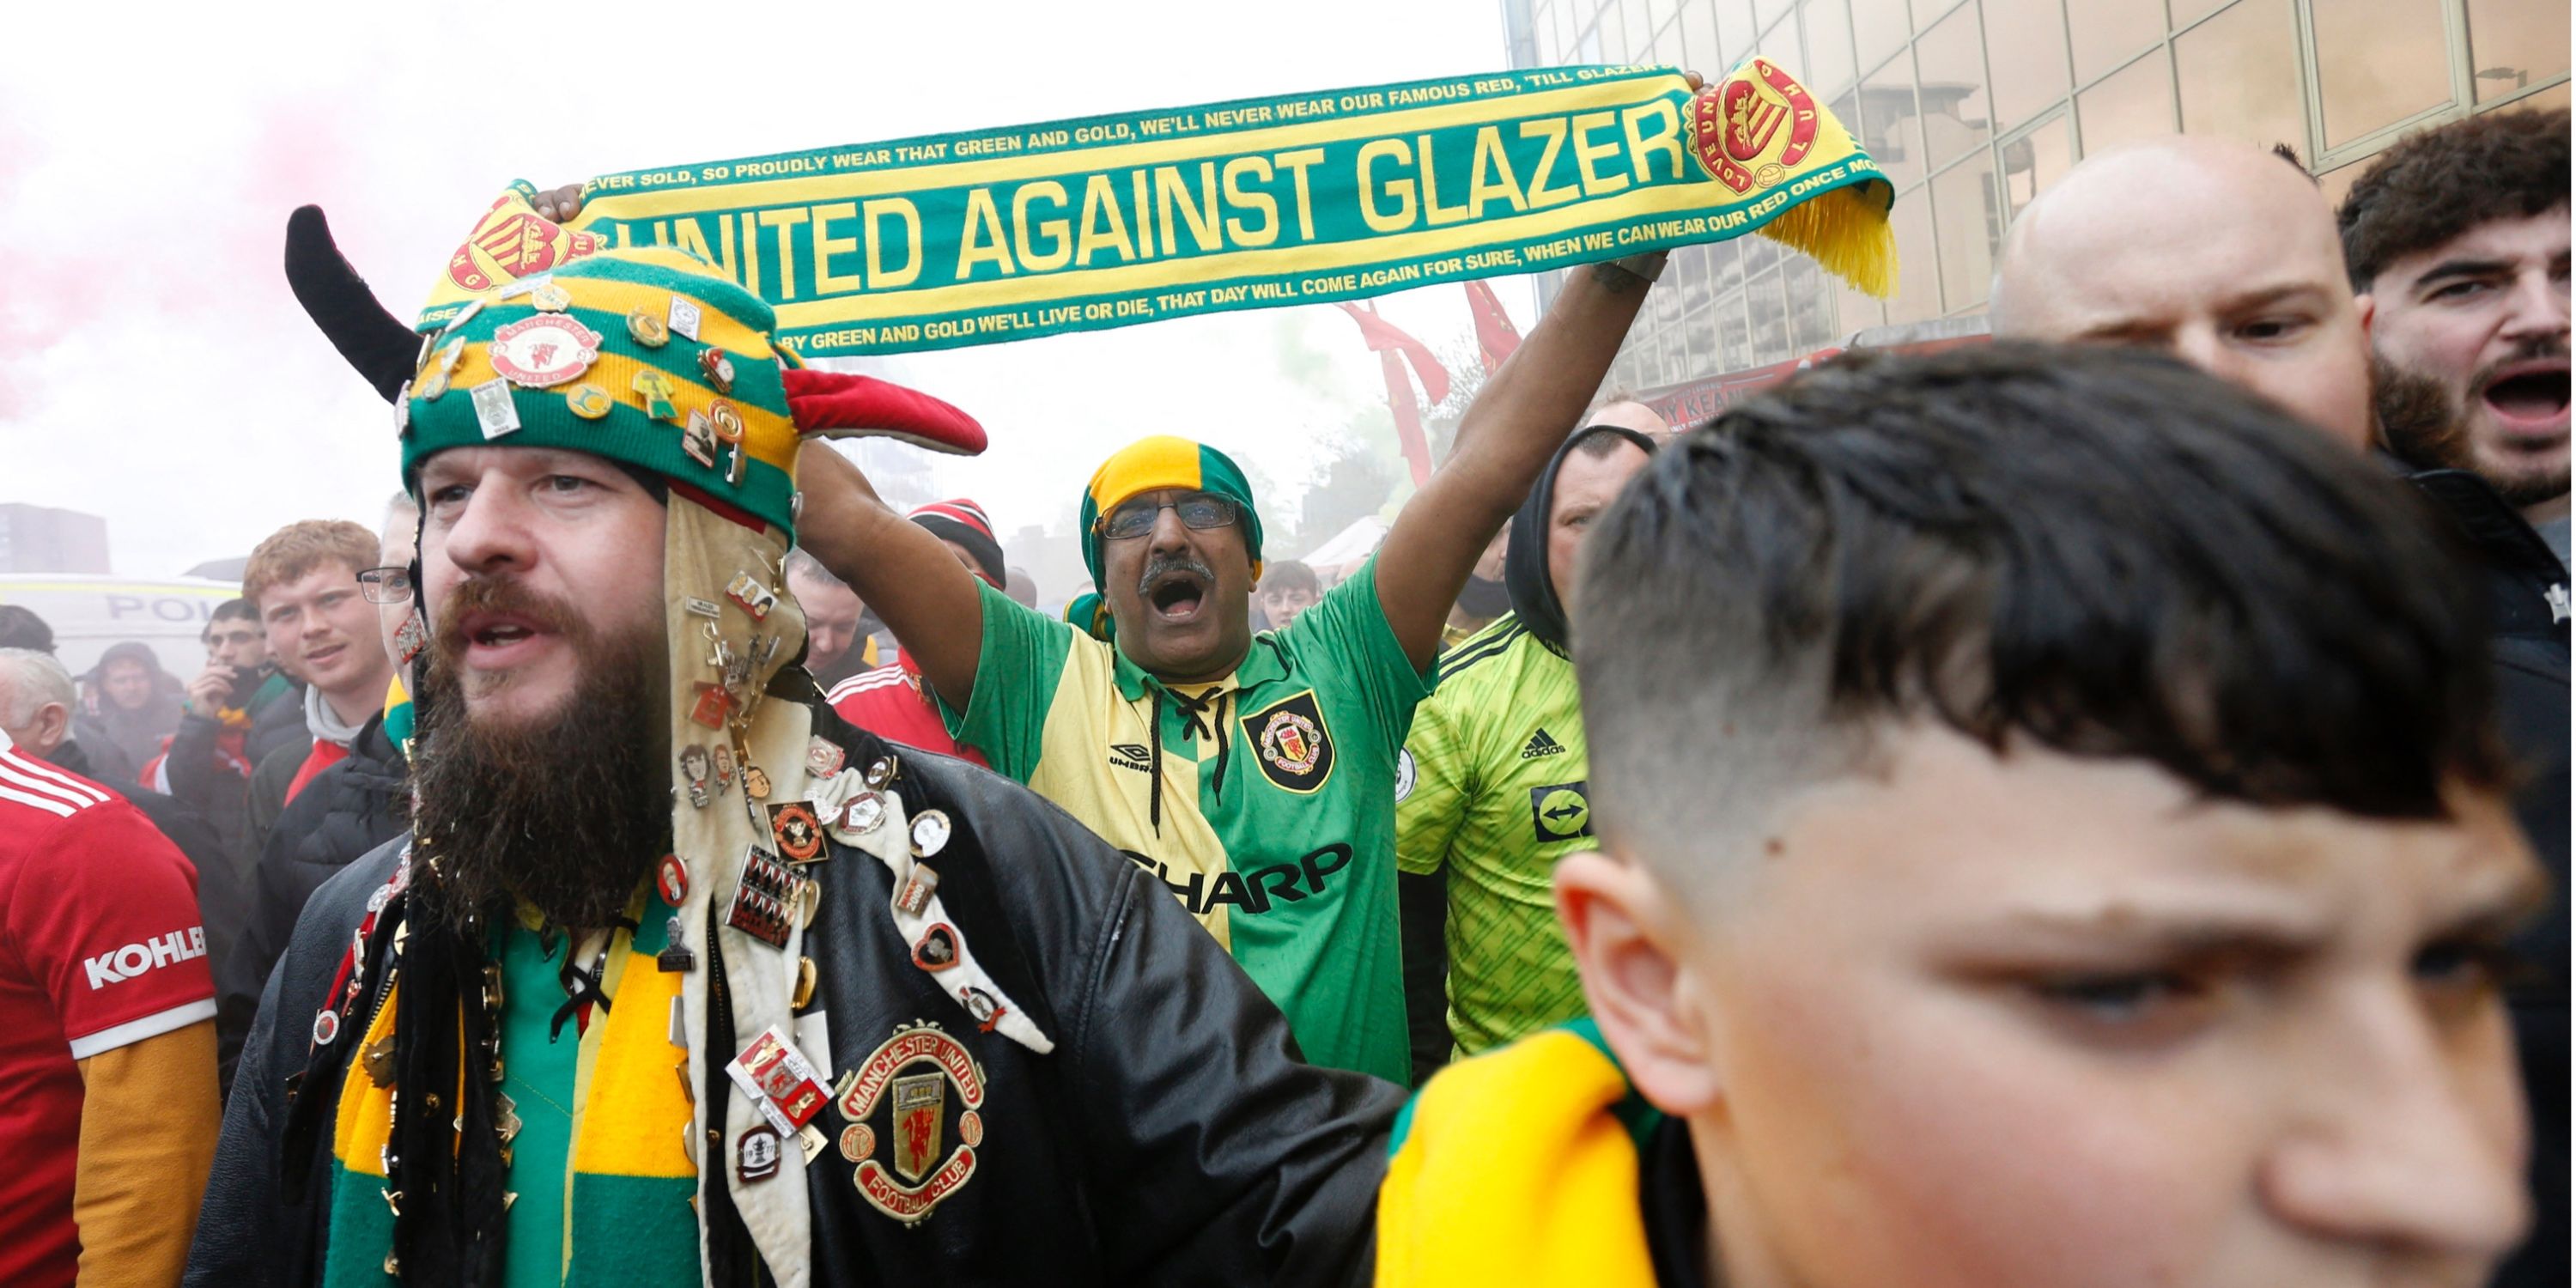 scarf-glazer-protest-man-united